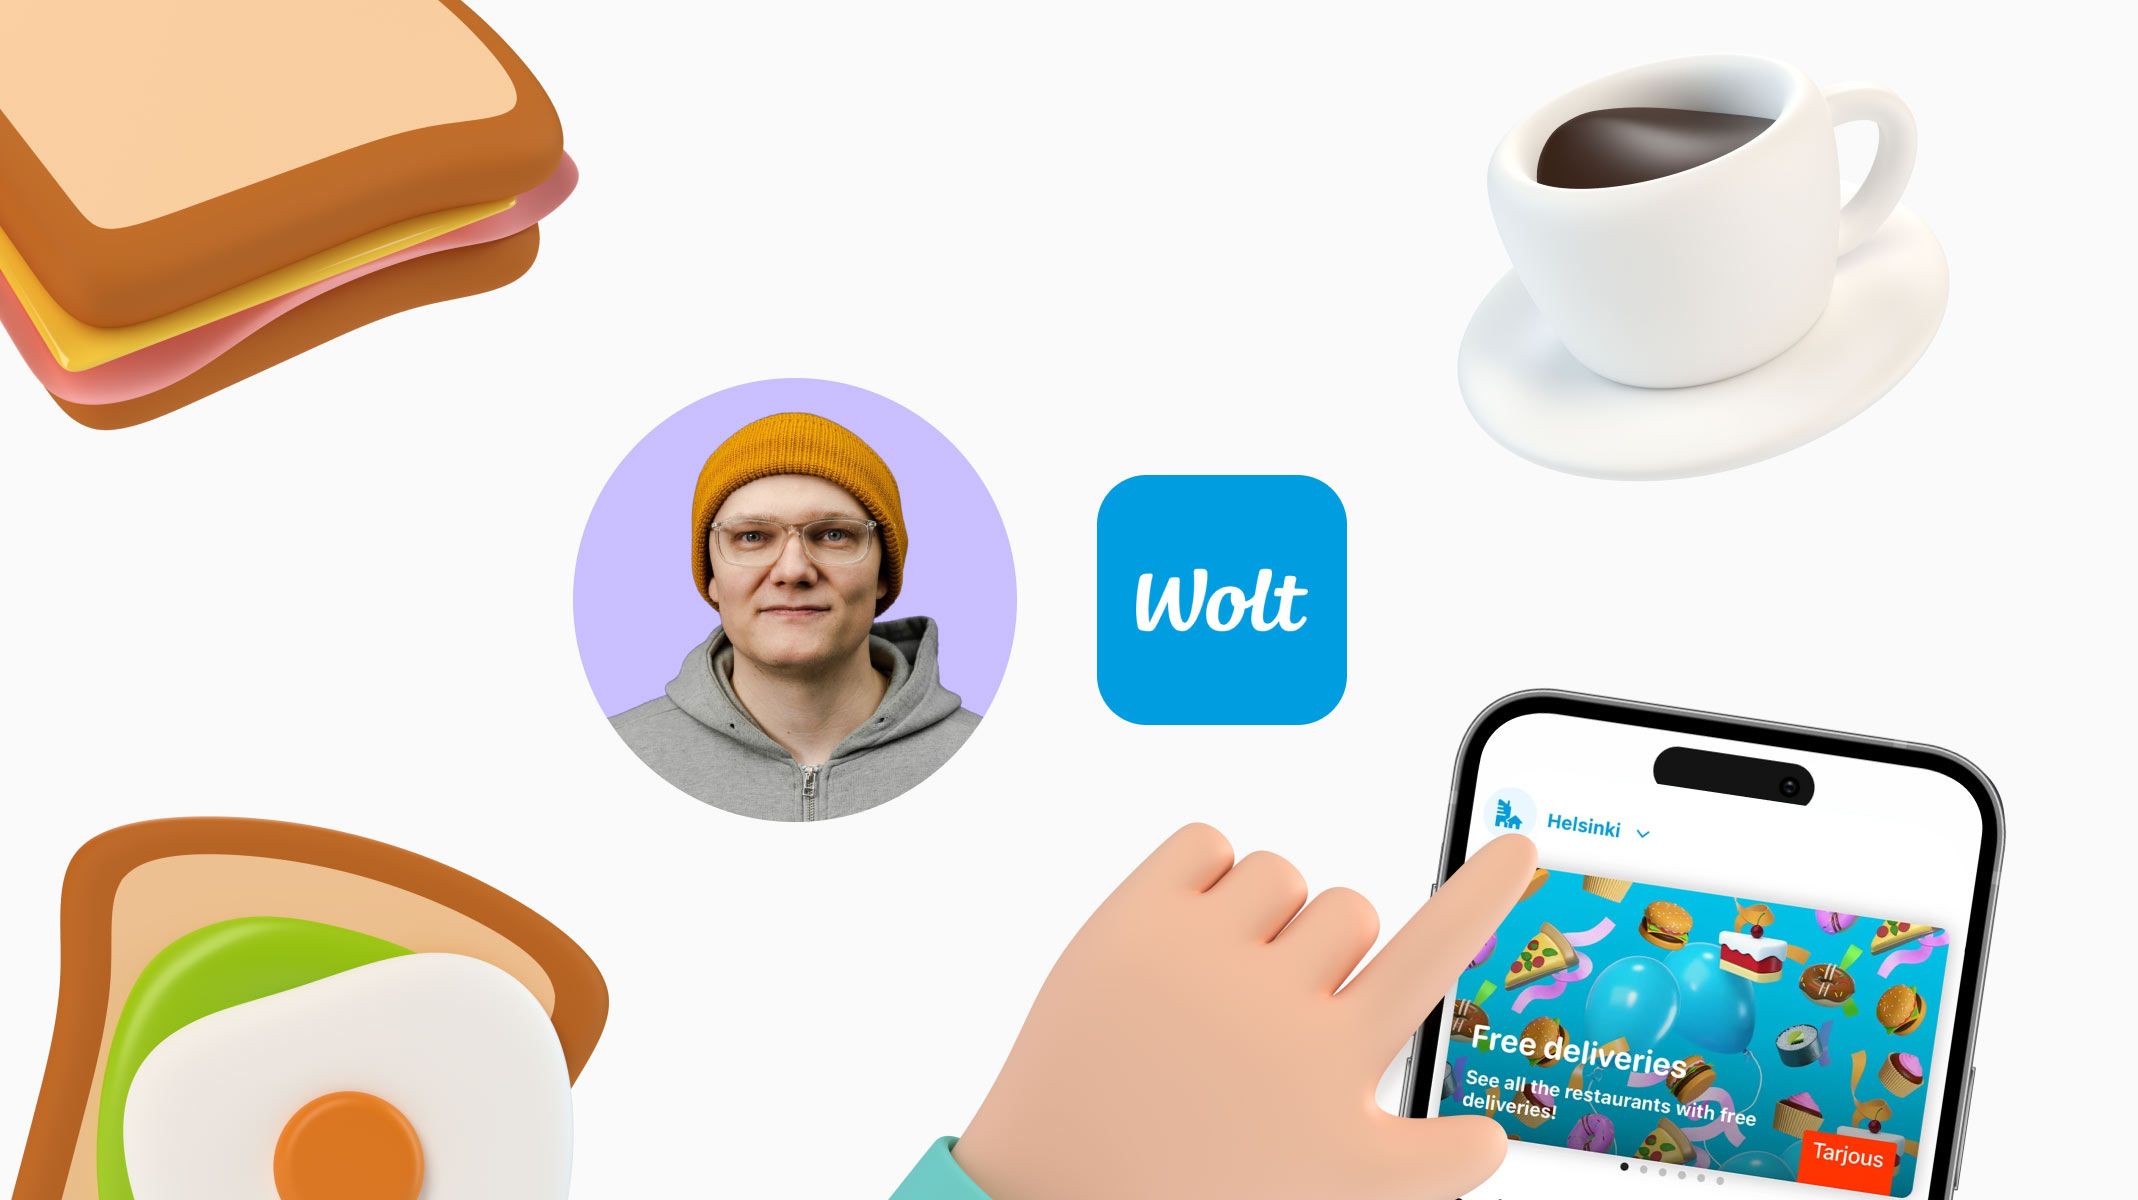 wolt logo and webinar speaker profile picture